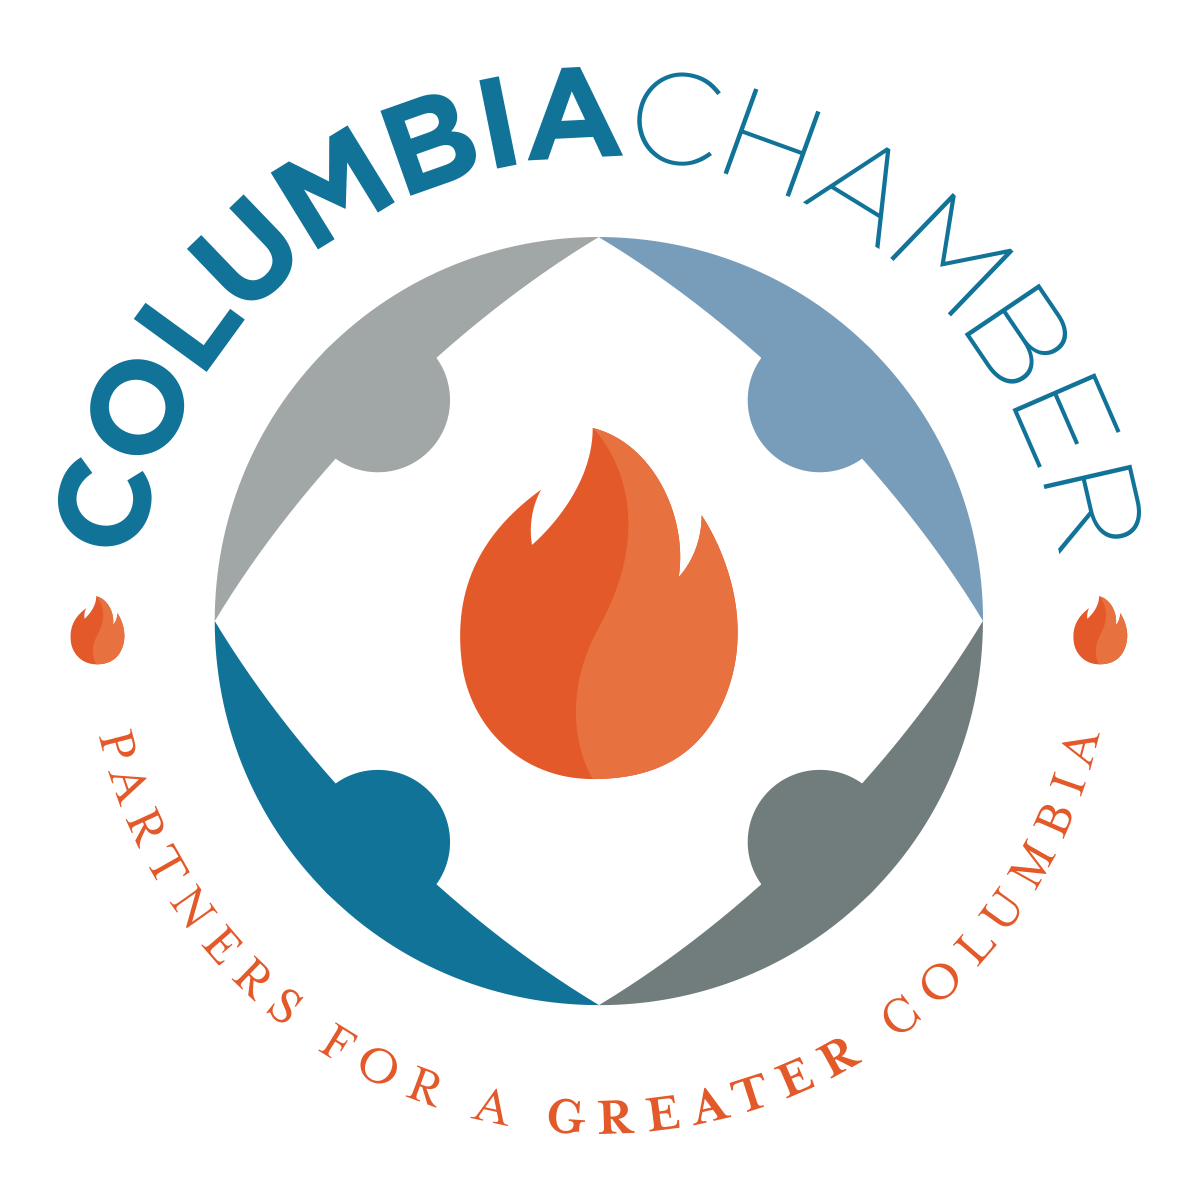 Columbia Chamber Logo